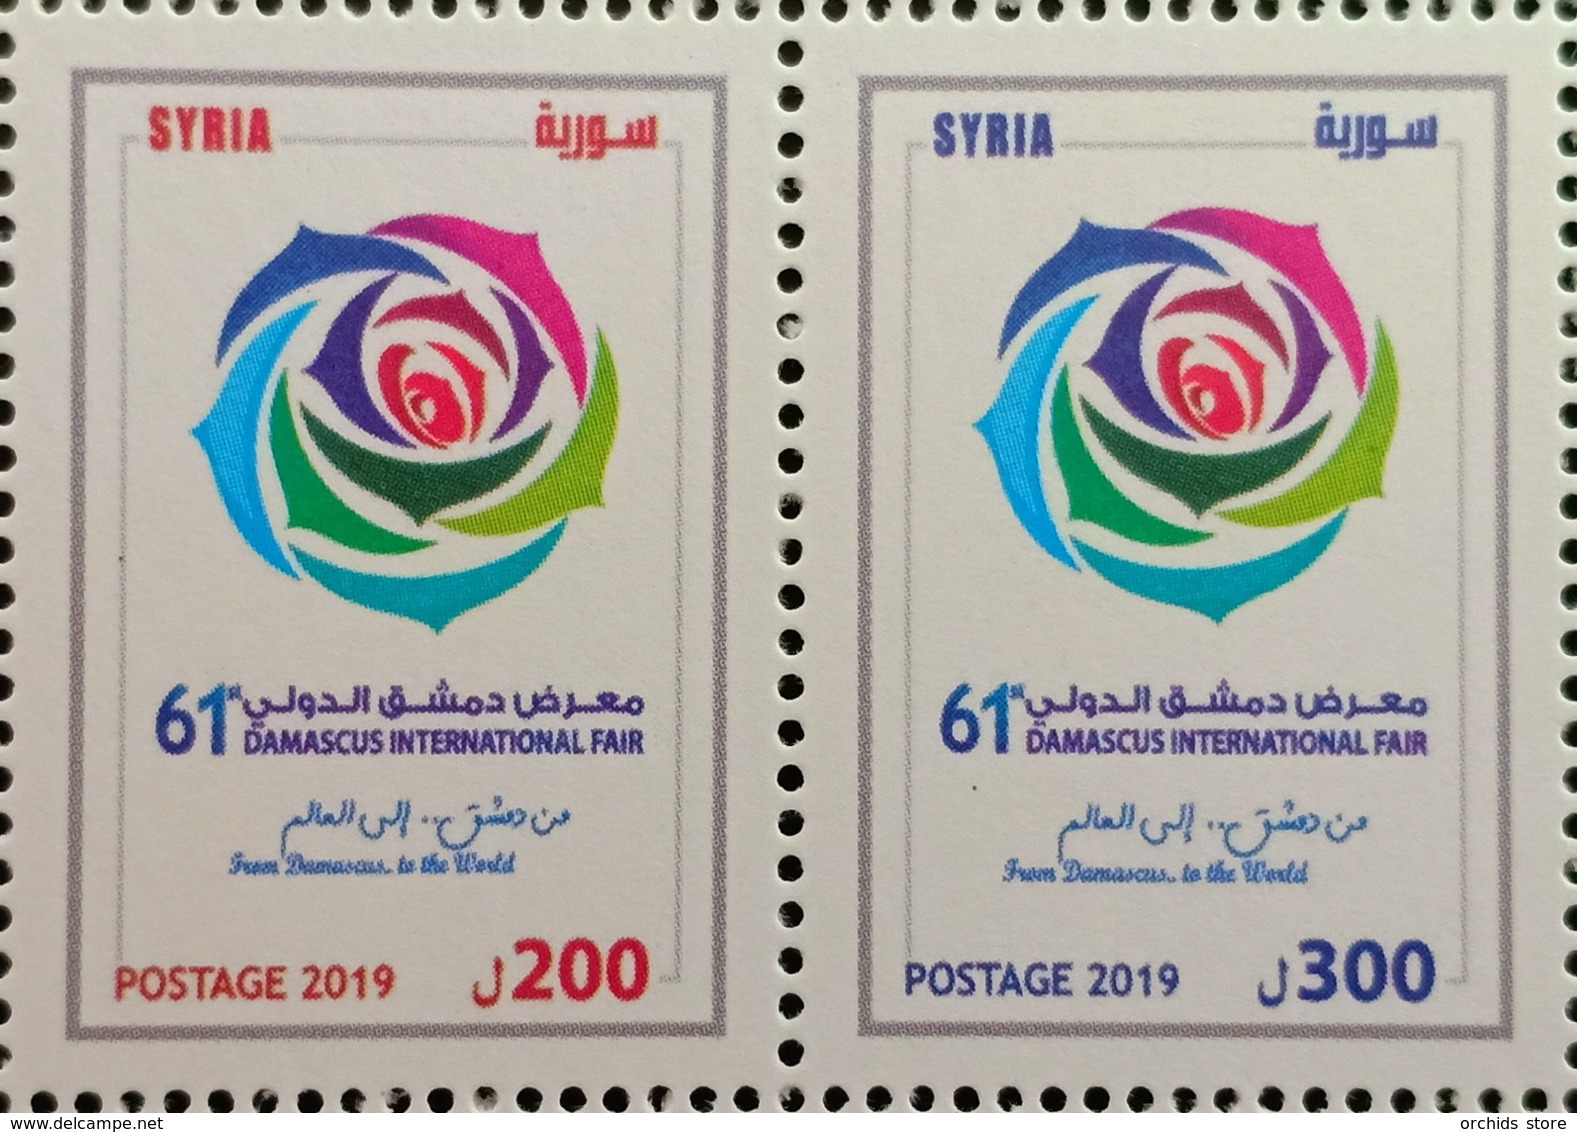 Syria 2019 NEW MNH Stamps - 61st Damascus International Fair, Flower - Syria